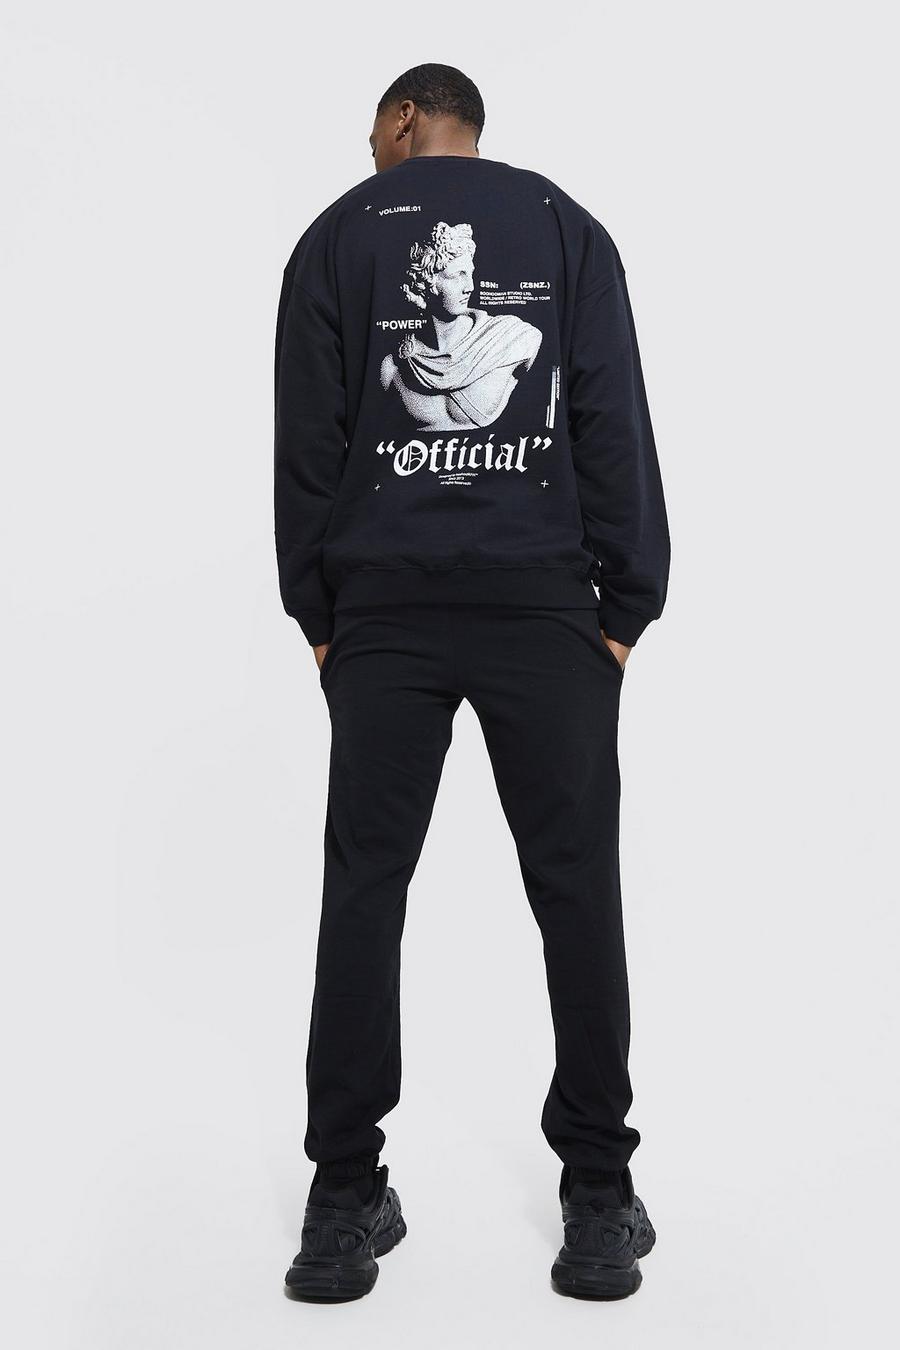 Black schwarz Oversized Official Sweatshirt Tracksuit